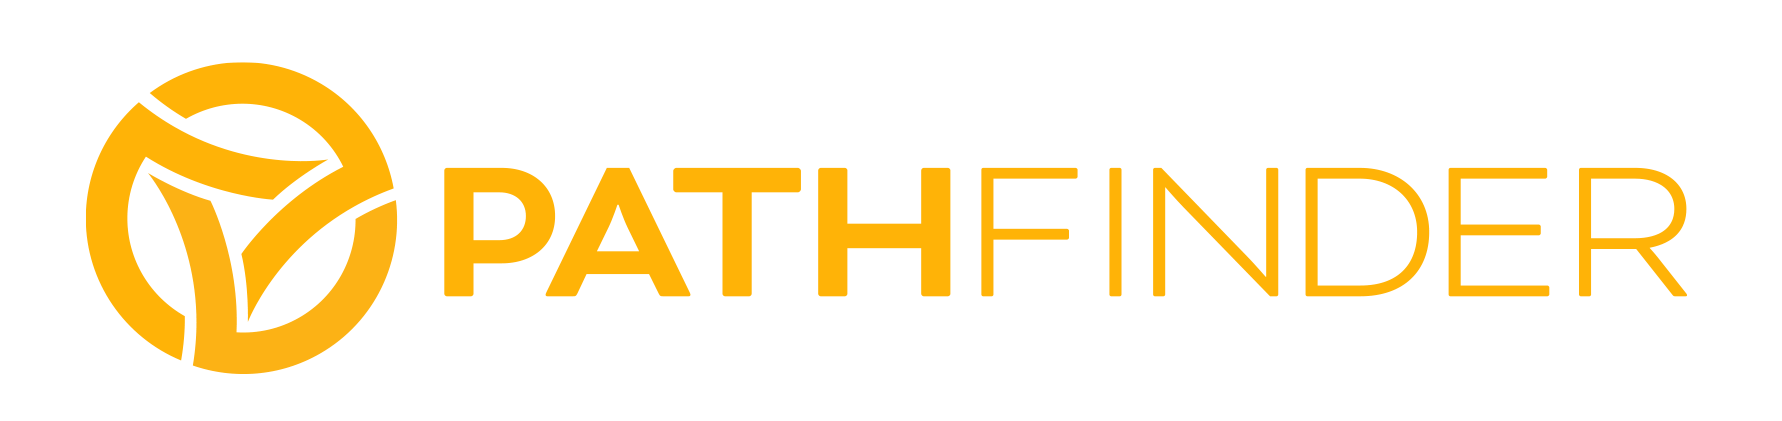 Pathfinder Primary Logo Color